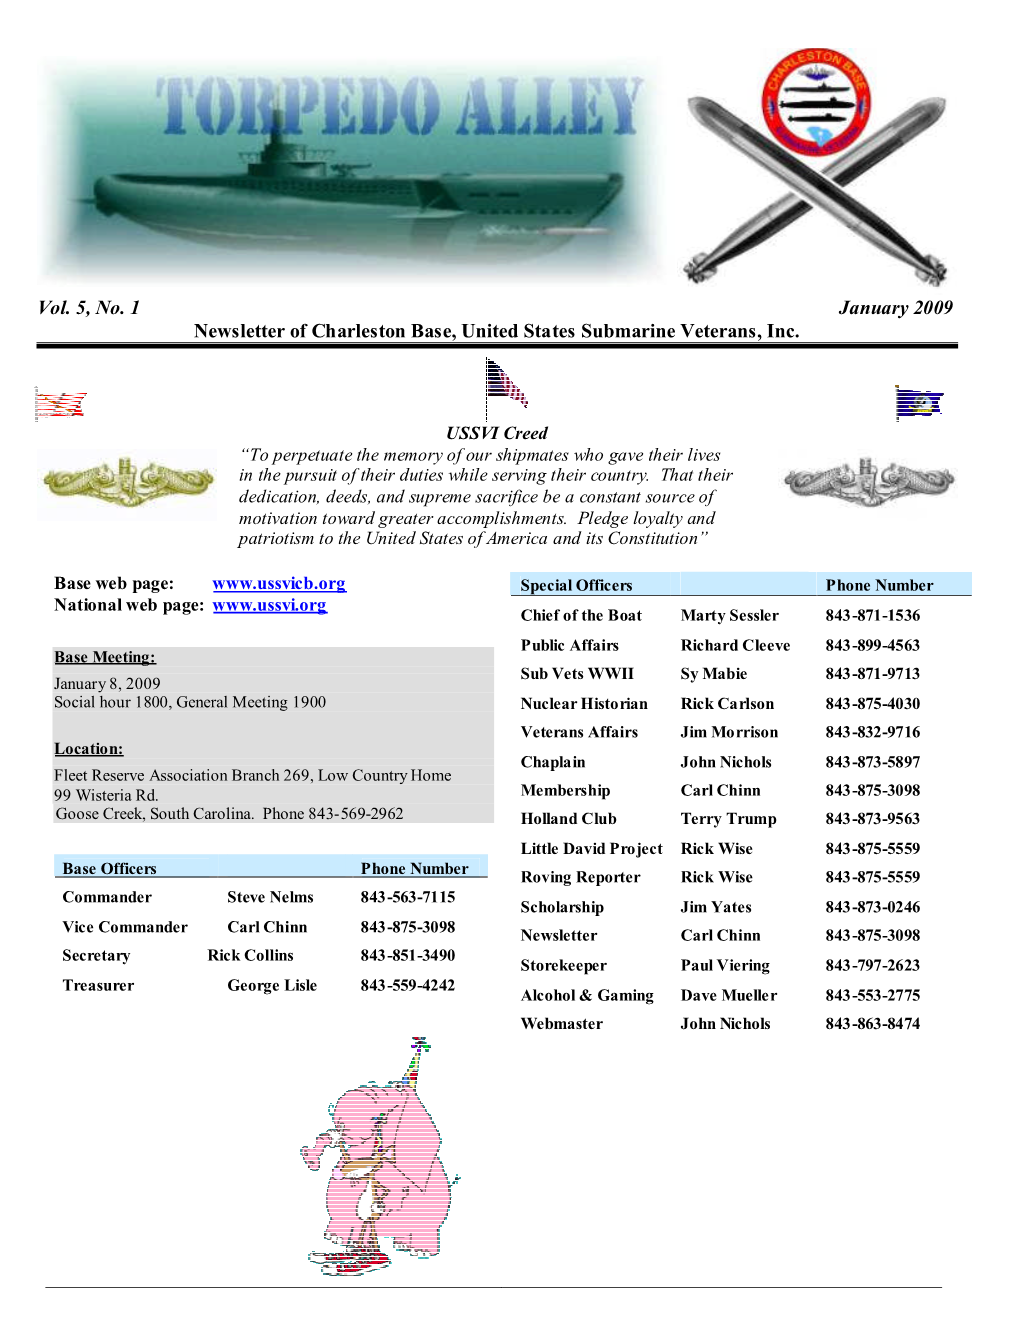 Vol. 5, No. 1 January 2009 Newsletter of Charleston Base, United States Submarine Veterans, Inc